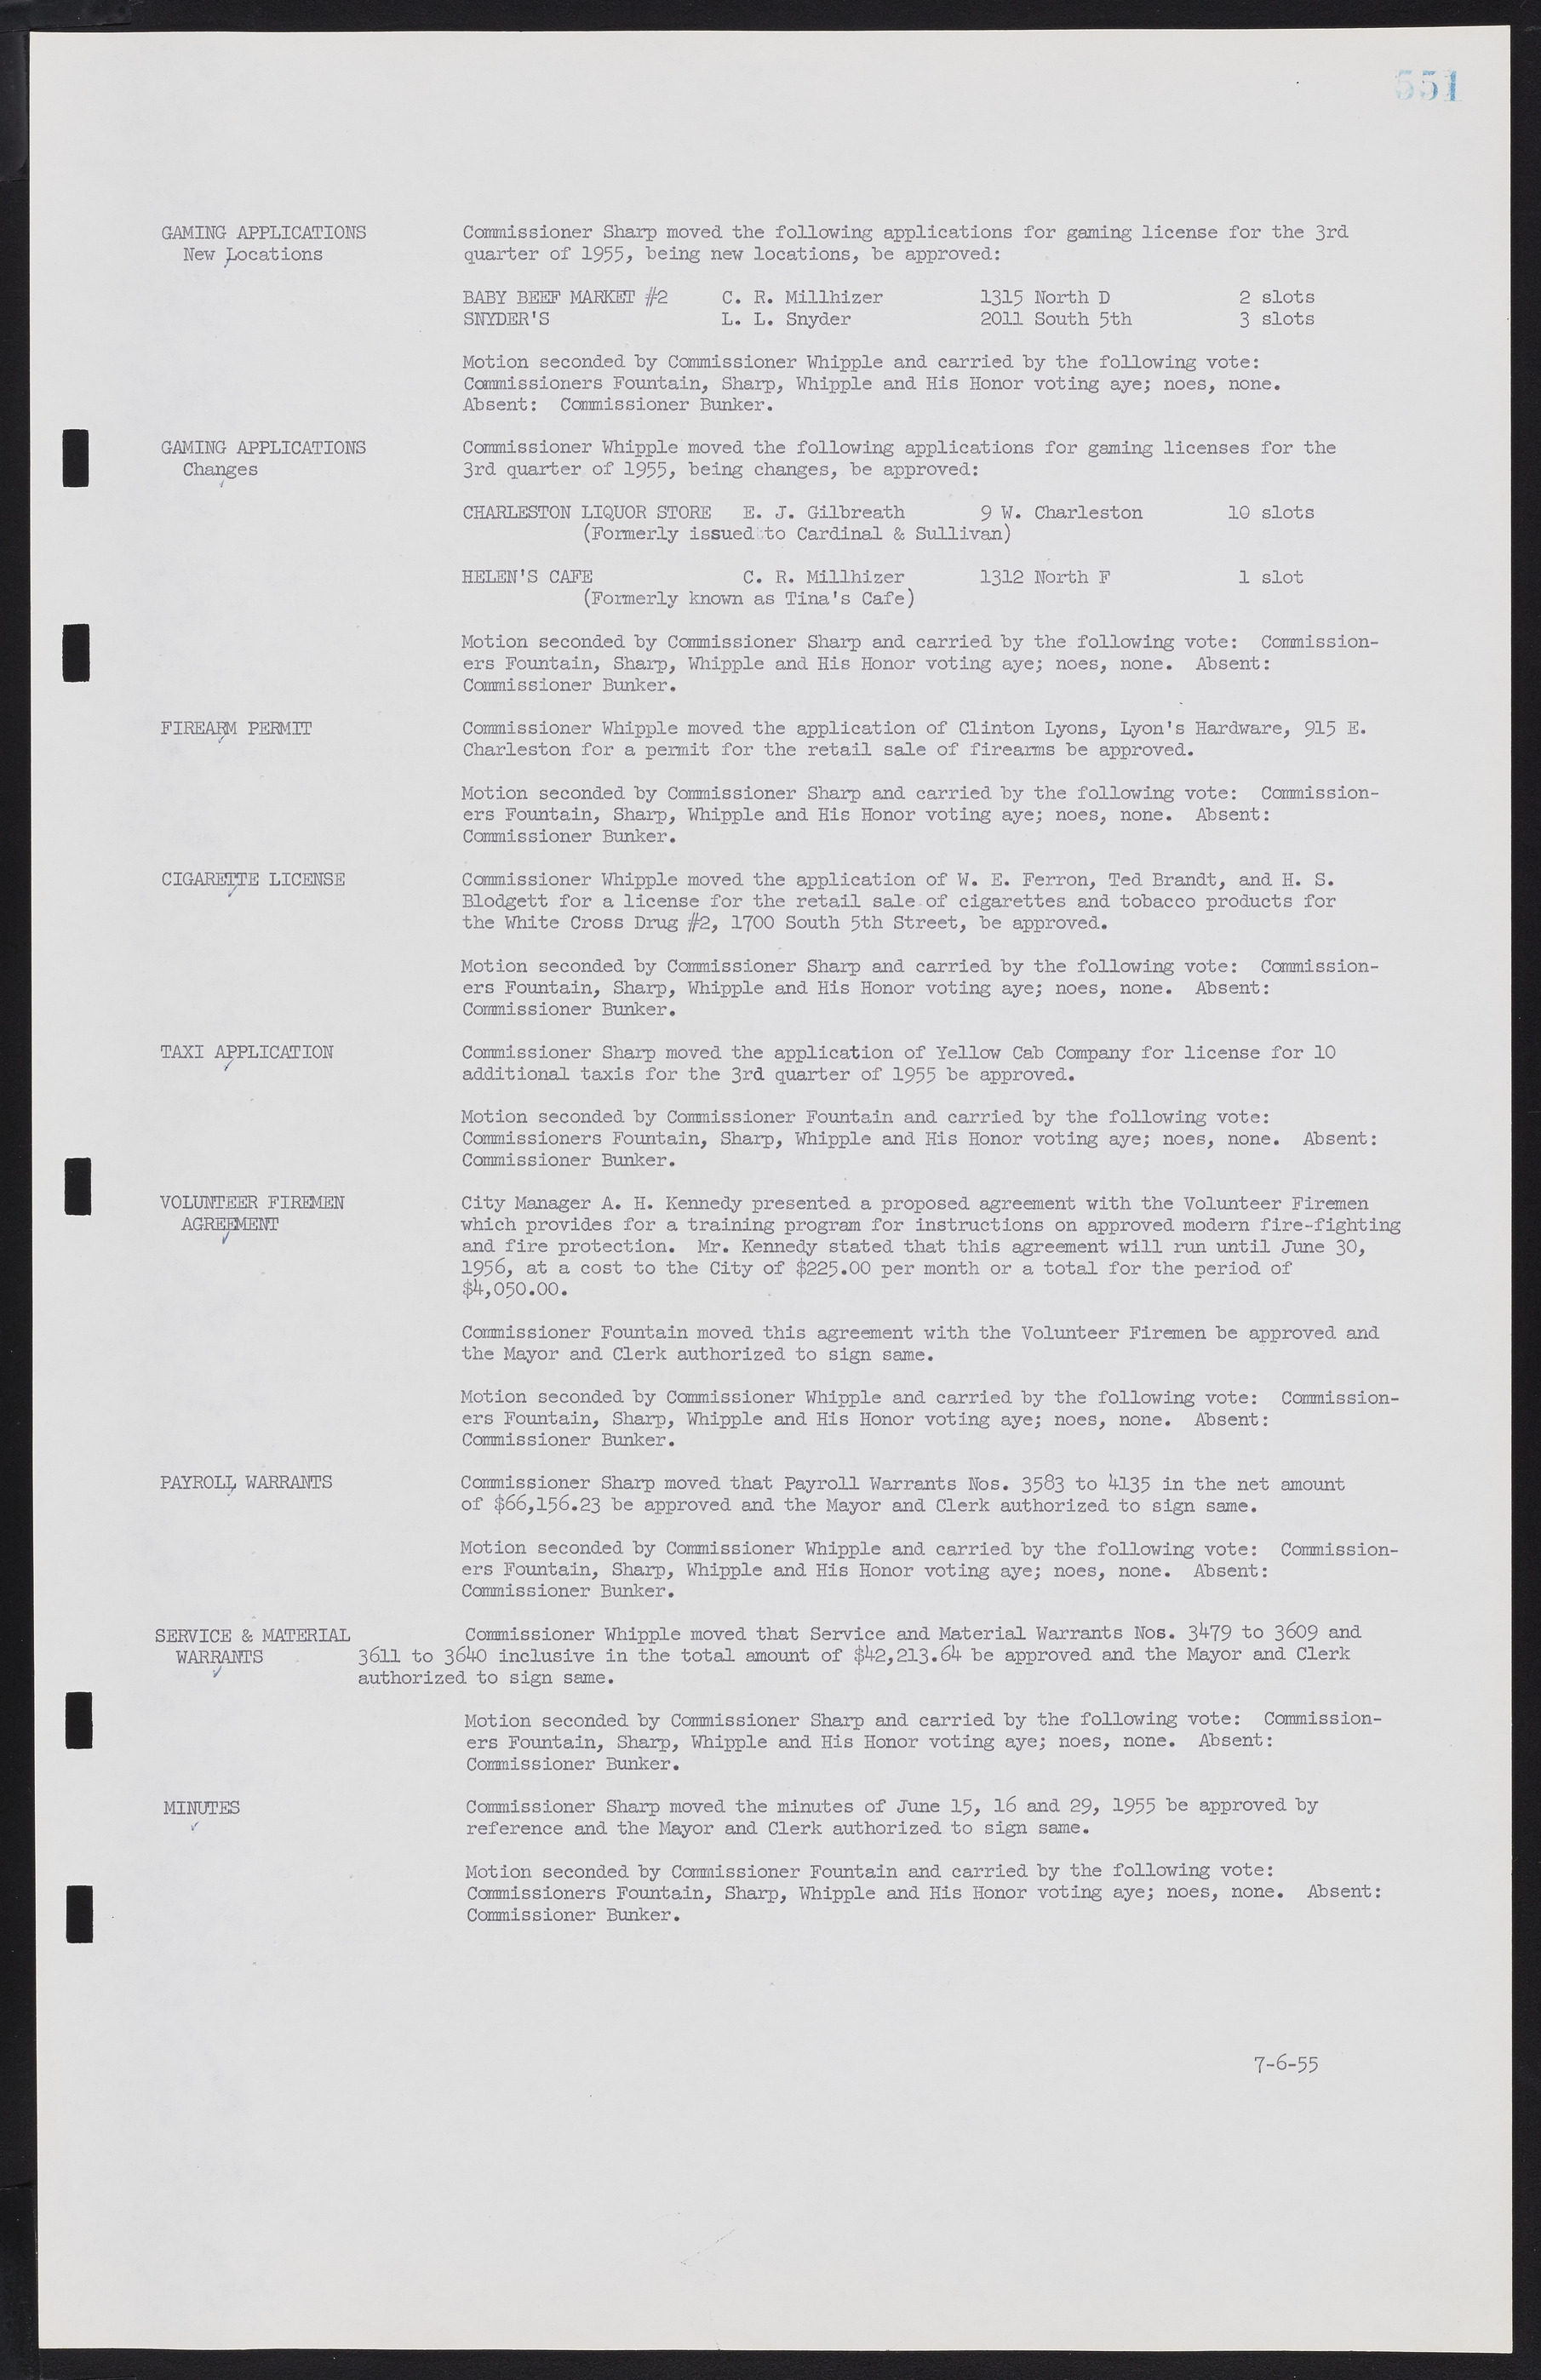 Las Vegas City Commission Minutes, February 17, 1954 to September 21, 1955, lvc000009-557